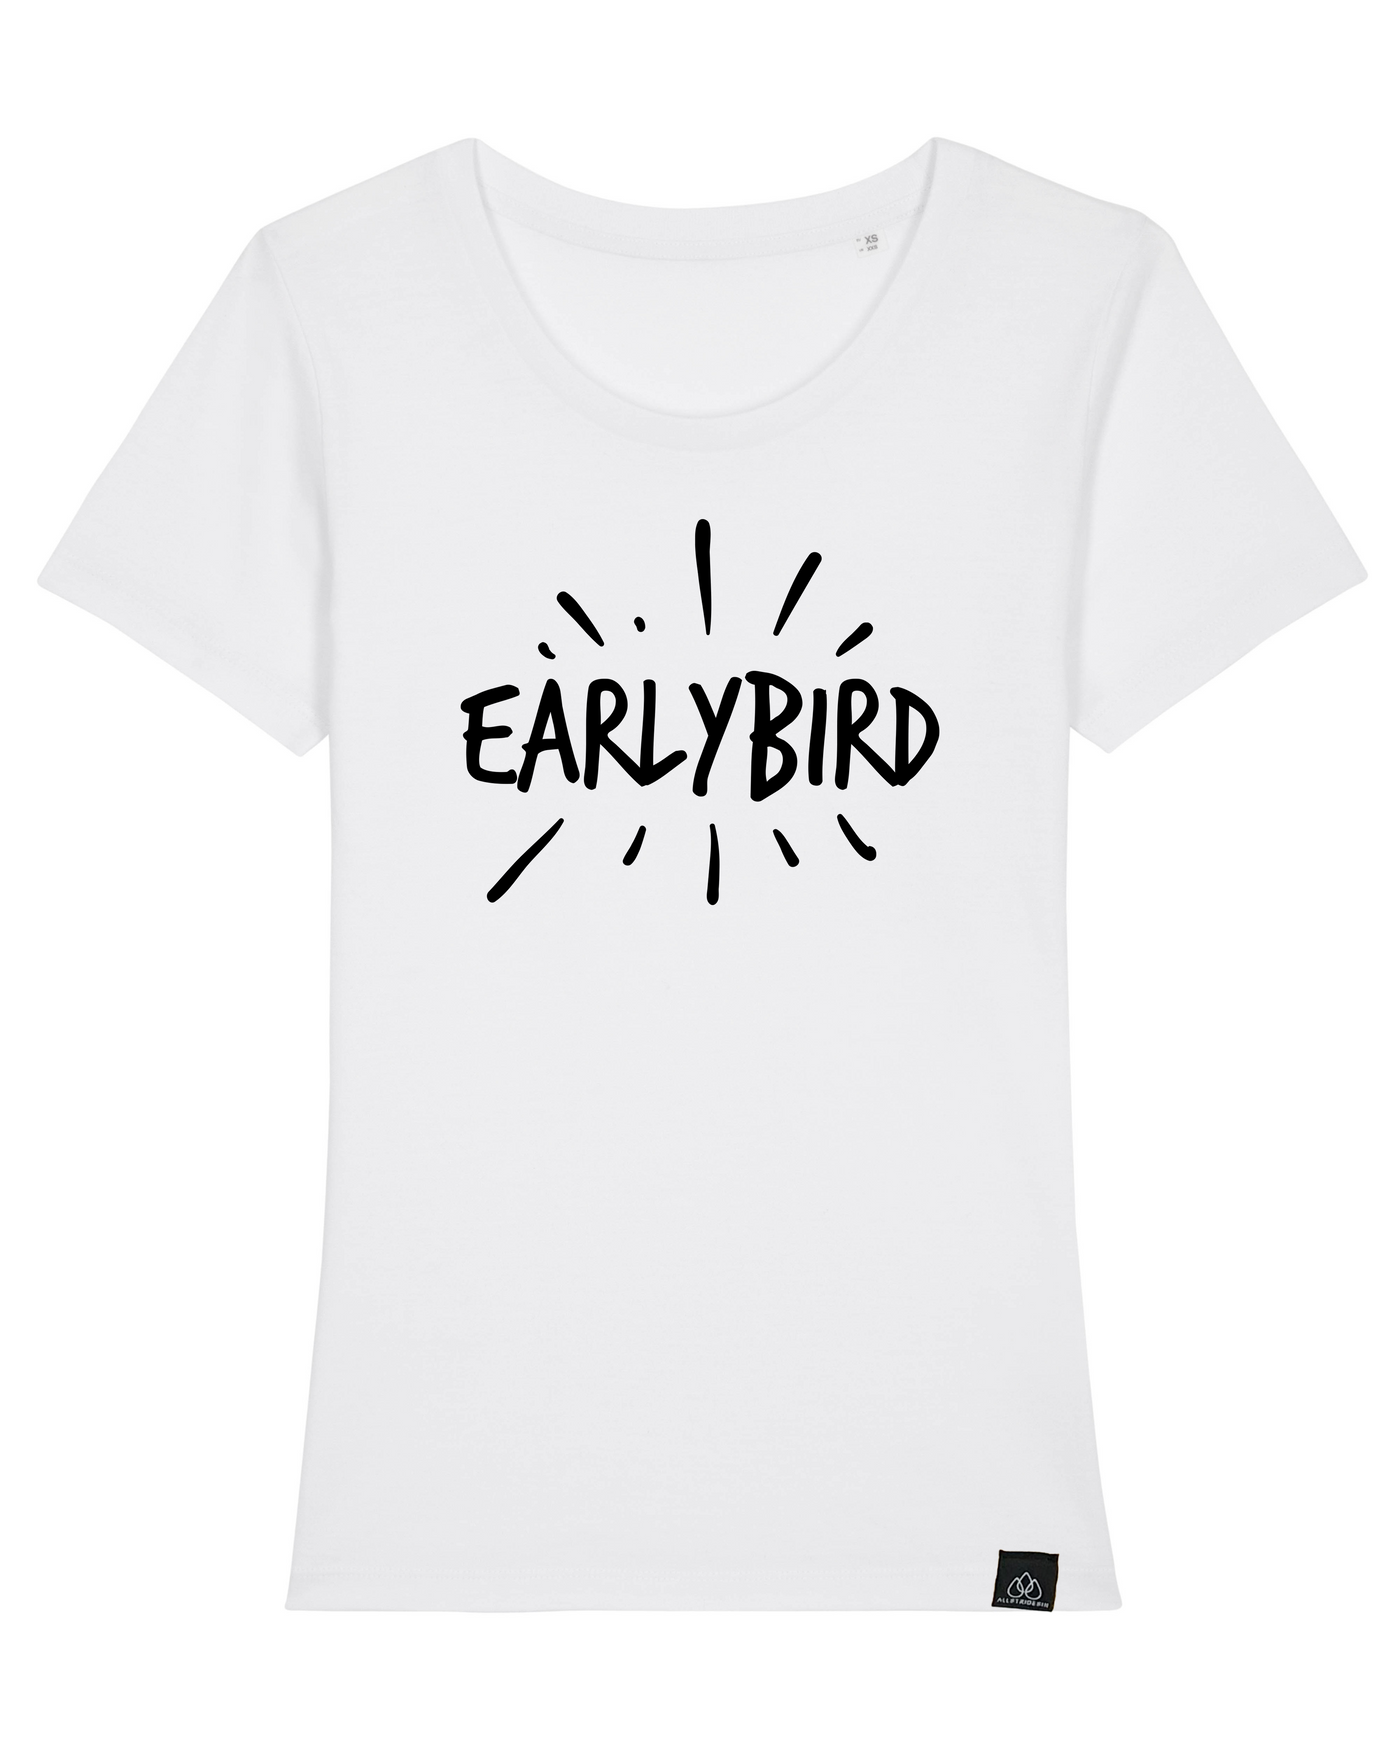 EARLYBIRD - ICONIC LADY T-SHIRT | ALLSTRIDESIN®